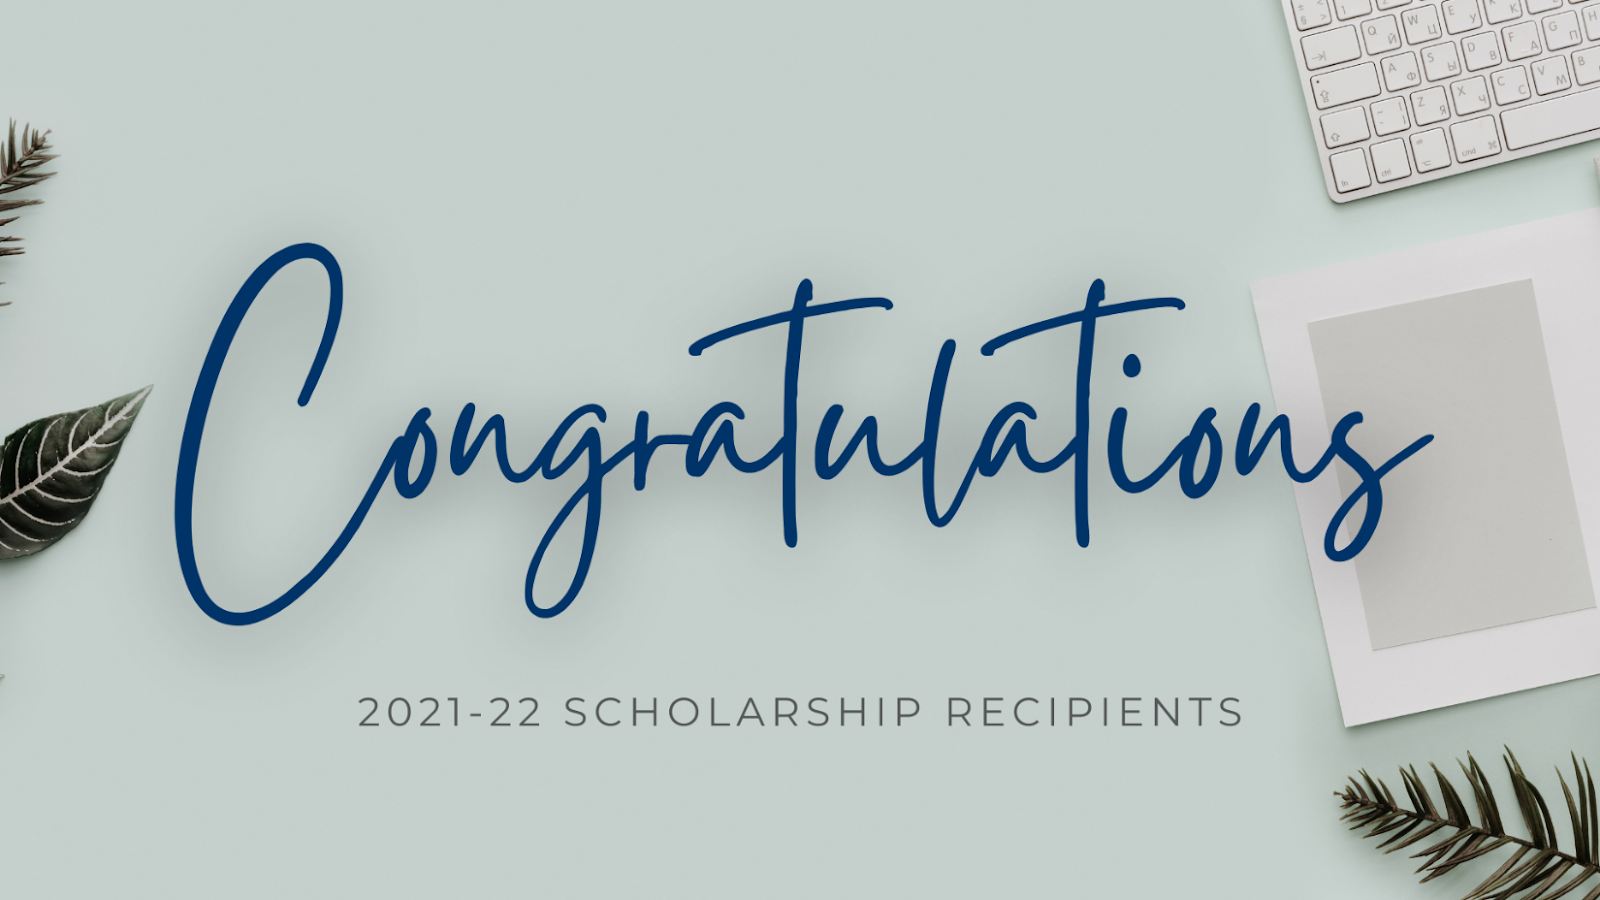 banner reading "congratulations 2021-22 scholarships recipients"